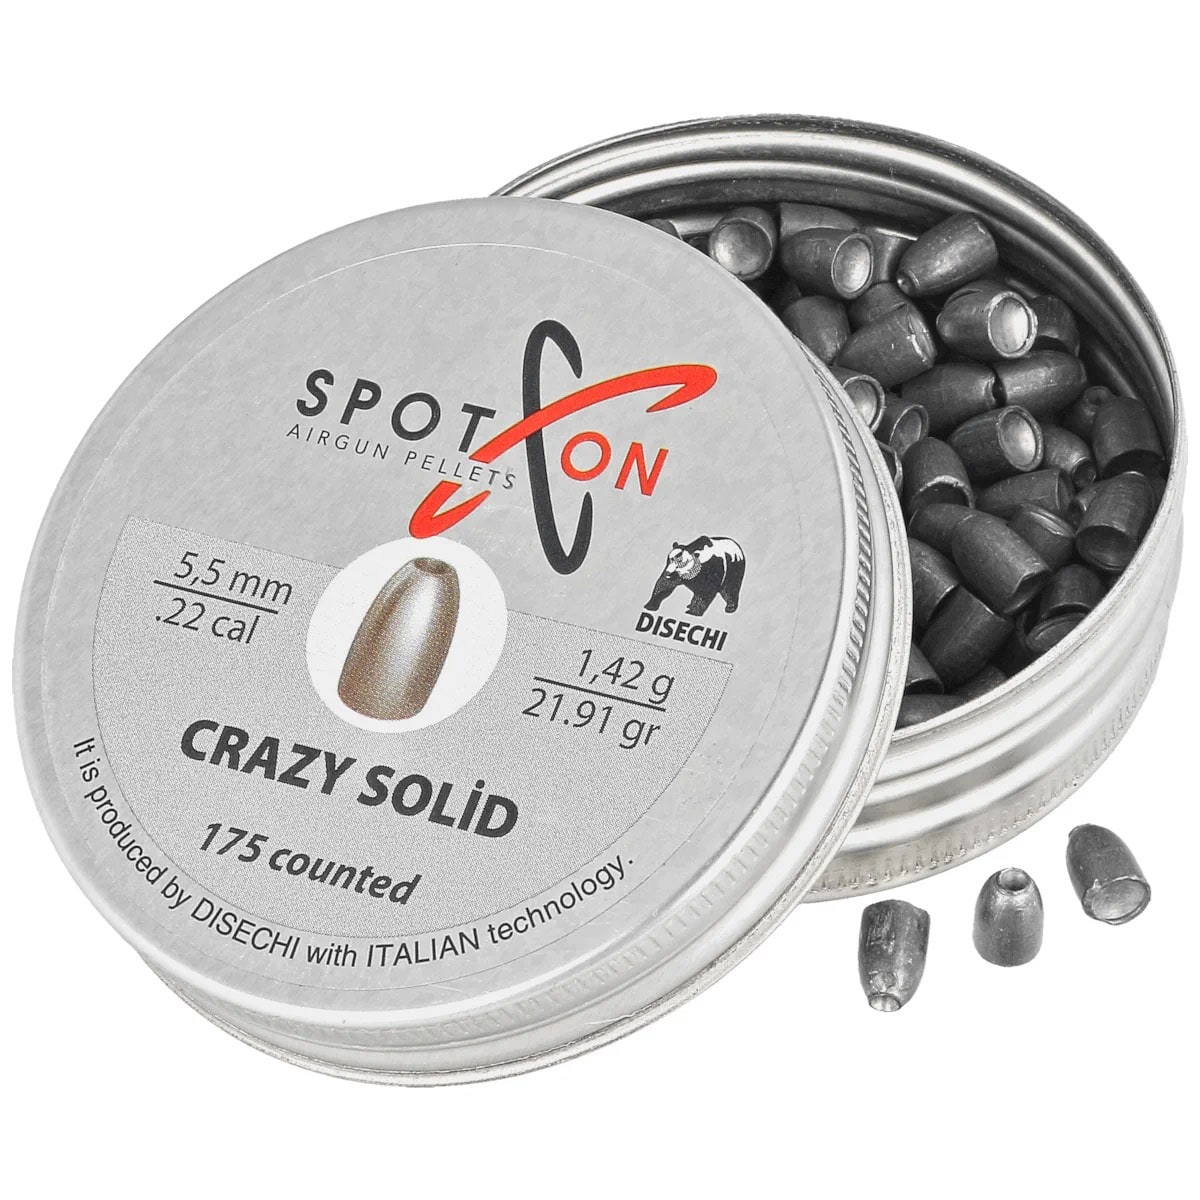 Śrut Spoton Crazy Solid Slug 5,5 mm - 175 szt.